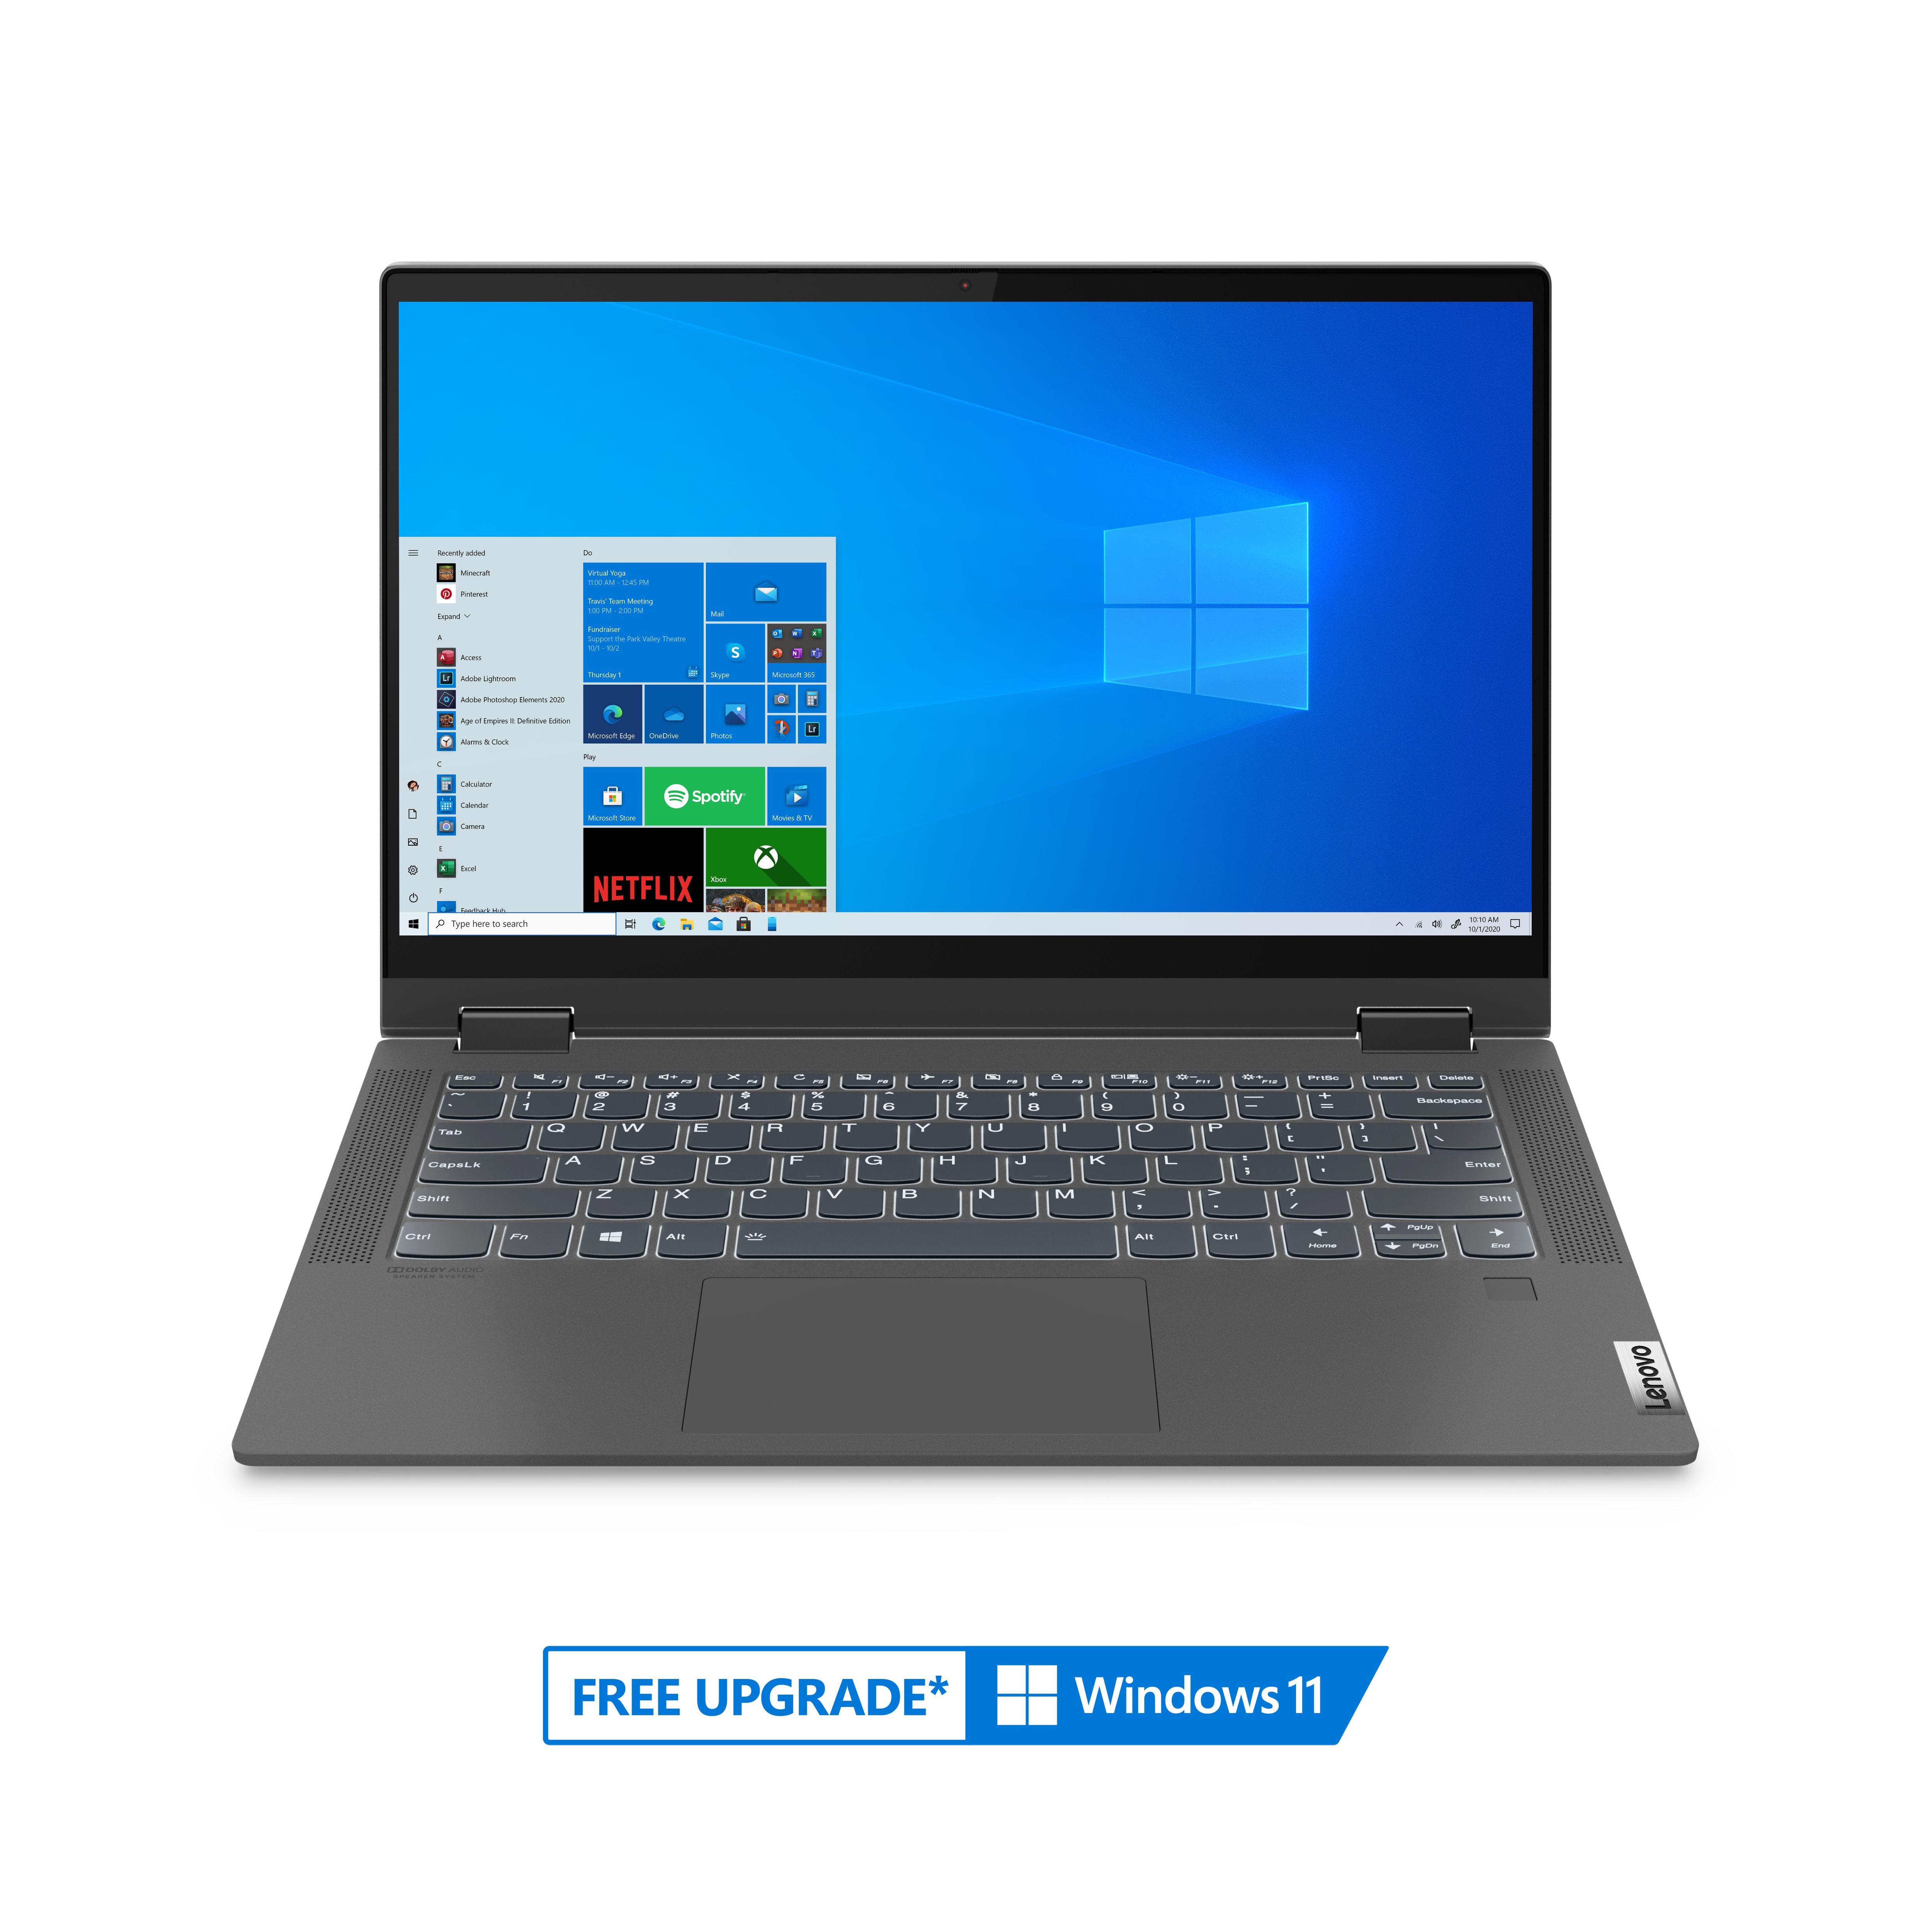 Lenovo Ideapad Flex 5 14" FHD 2-in-1 Touchscreen Laptop, AMD Ryzen 3, 4GB RAM, 128GB SSD, Graphite Gray, Windows 10, 82HU003JUS - image 4 of 21